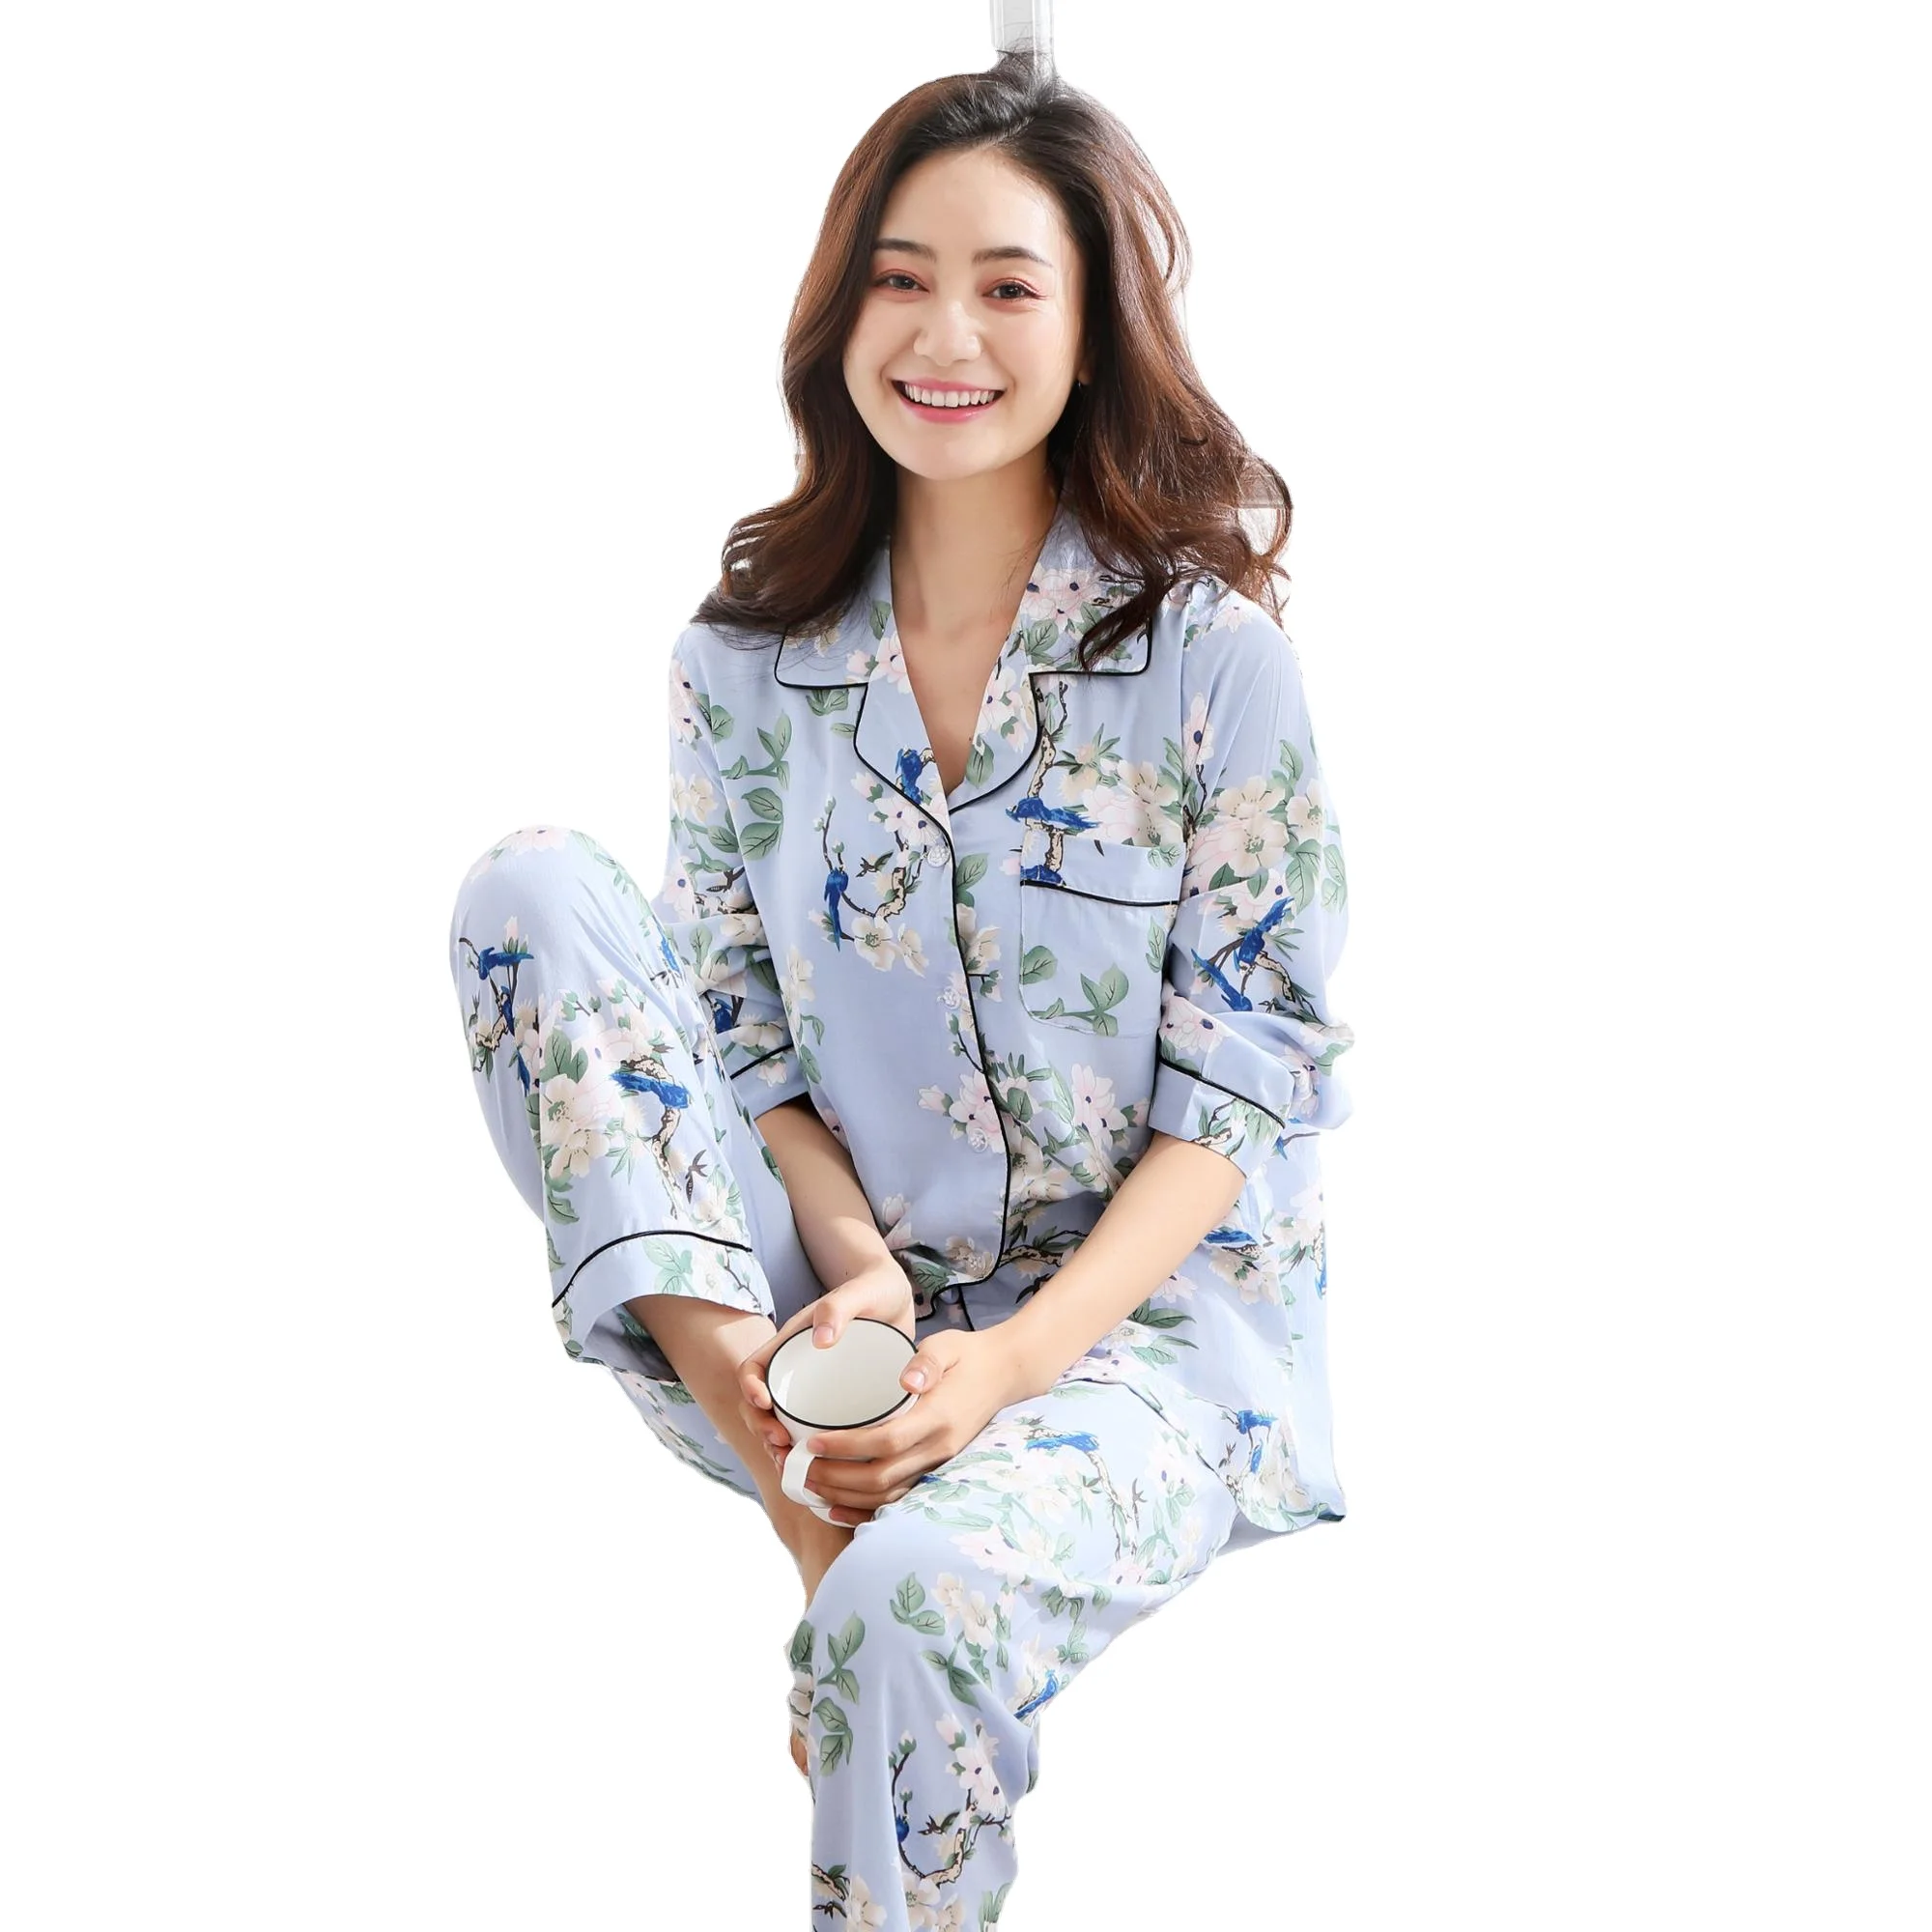 Oemレーヨンレディースパジャマ人気商品女の子ホットセクシープリントビスコースコットン長袖ターンダウンカラーパジャマセット Buy Cotton Pajamas Pajamas Pajamas Women Product On Alibaba Com